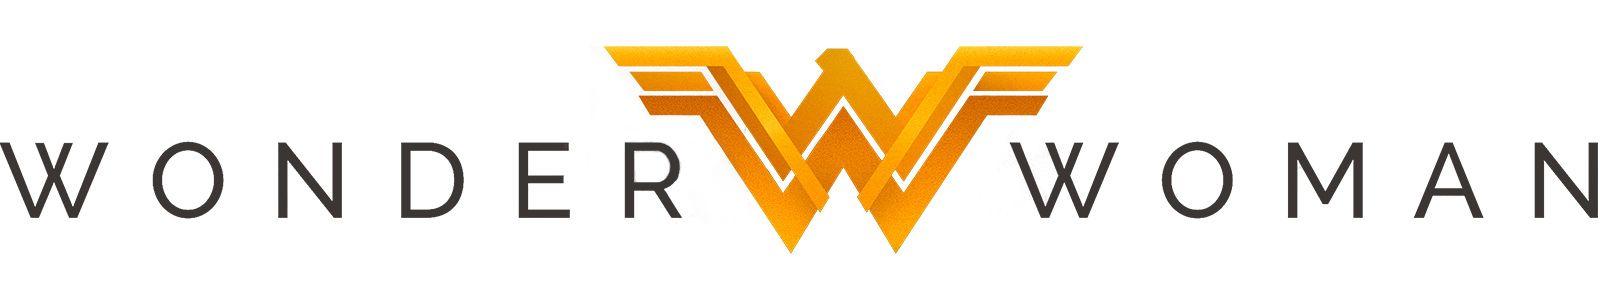 Wonder Woman Movie Logo - Wonder Woman: Watch the Full Movie Starring Gal Gadot & Chris Pine | HBO